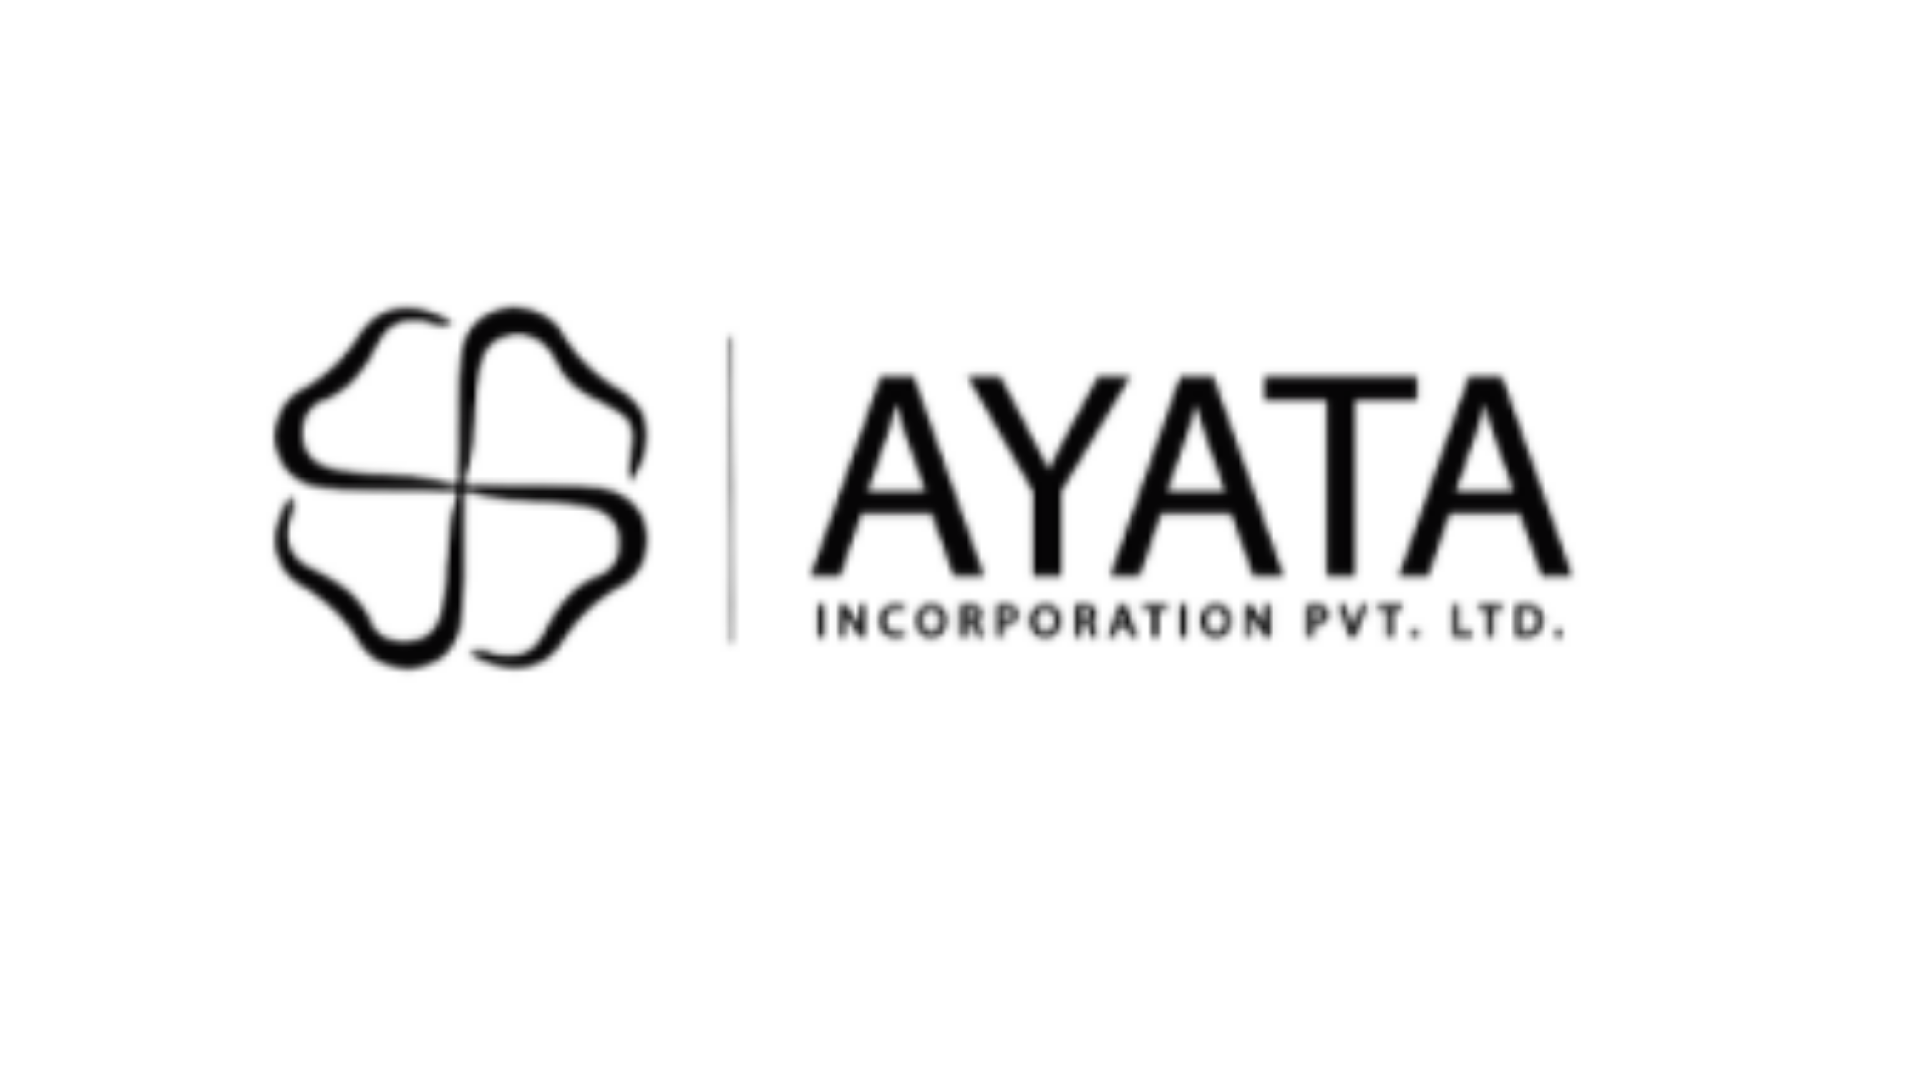 Ayata incorporation pvt. ltd. logo